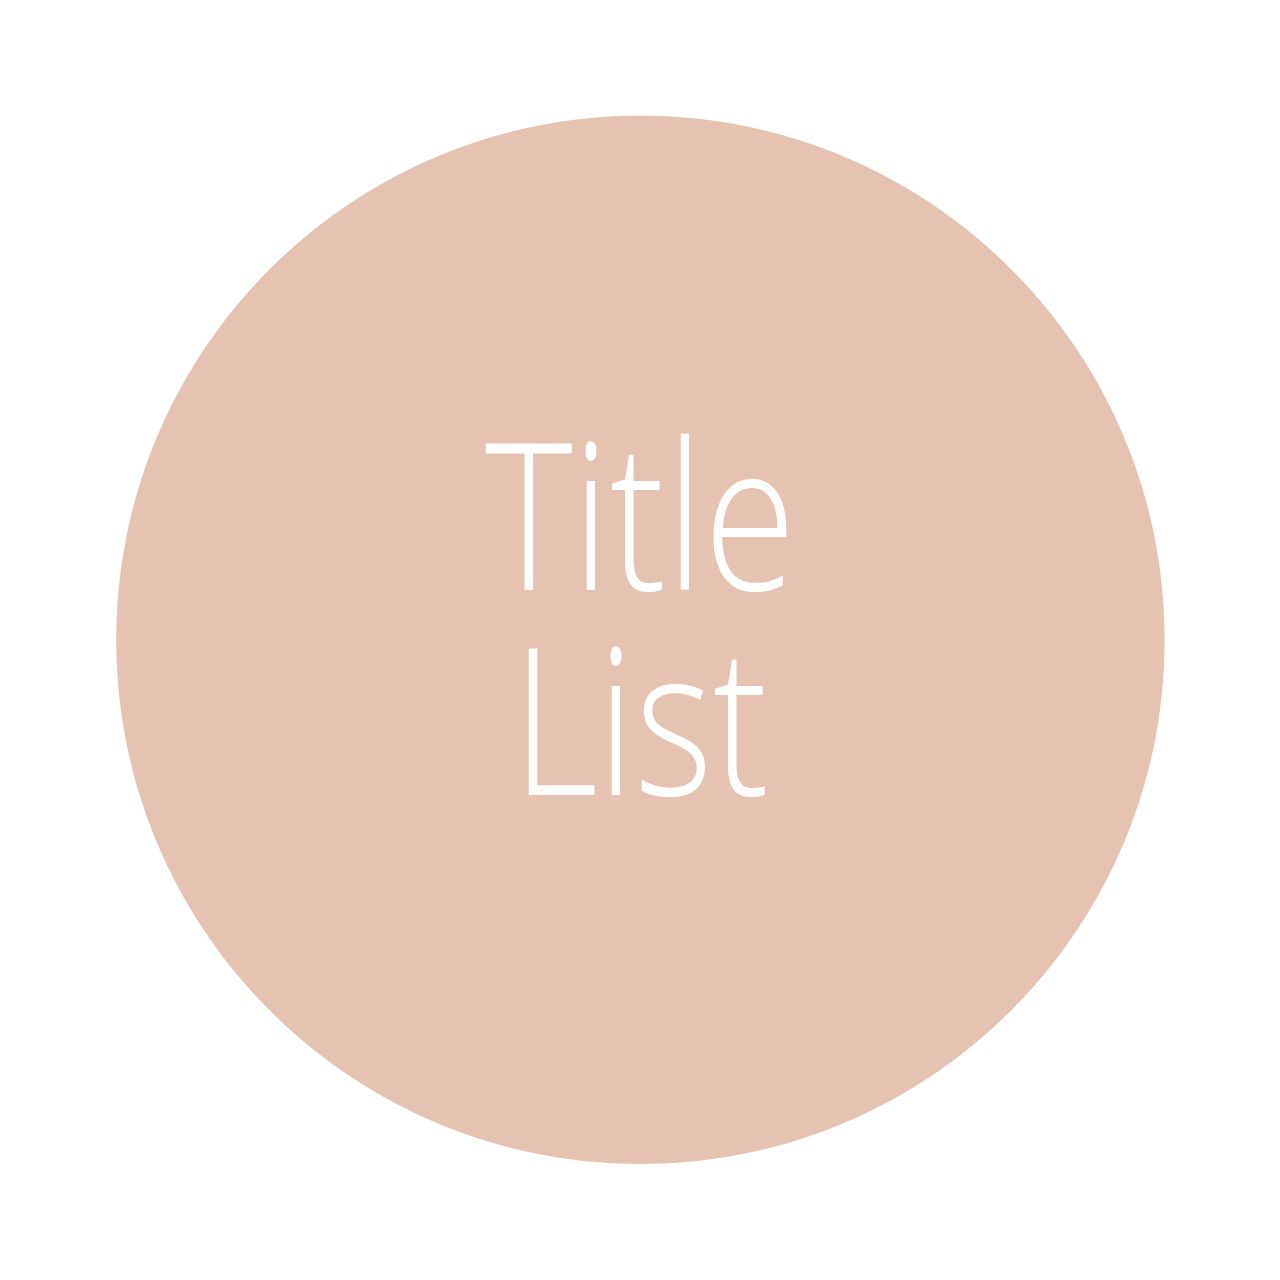 Title List Communication